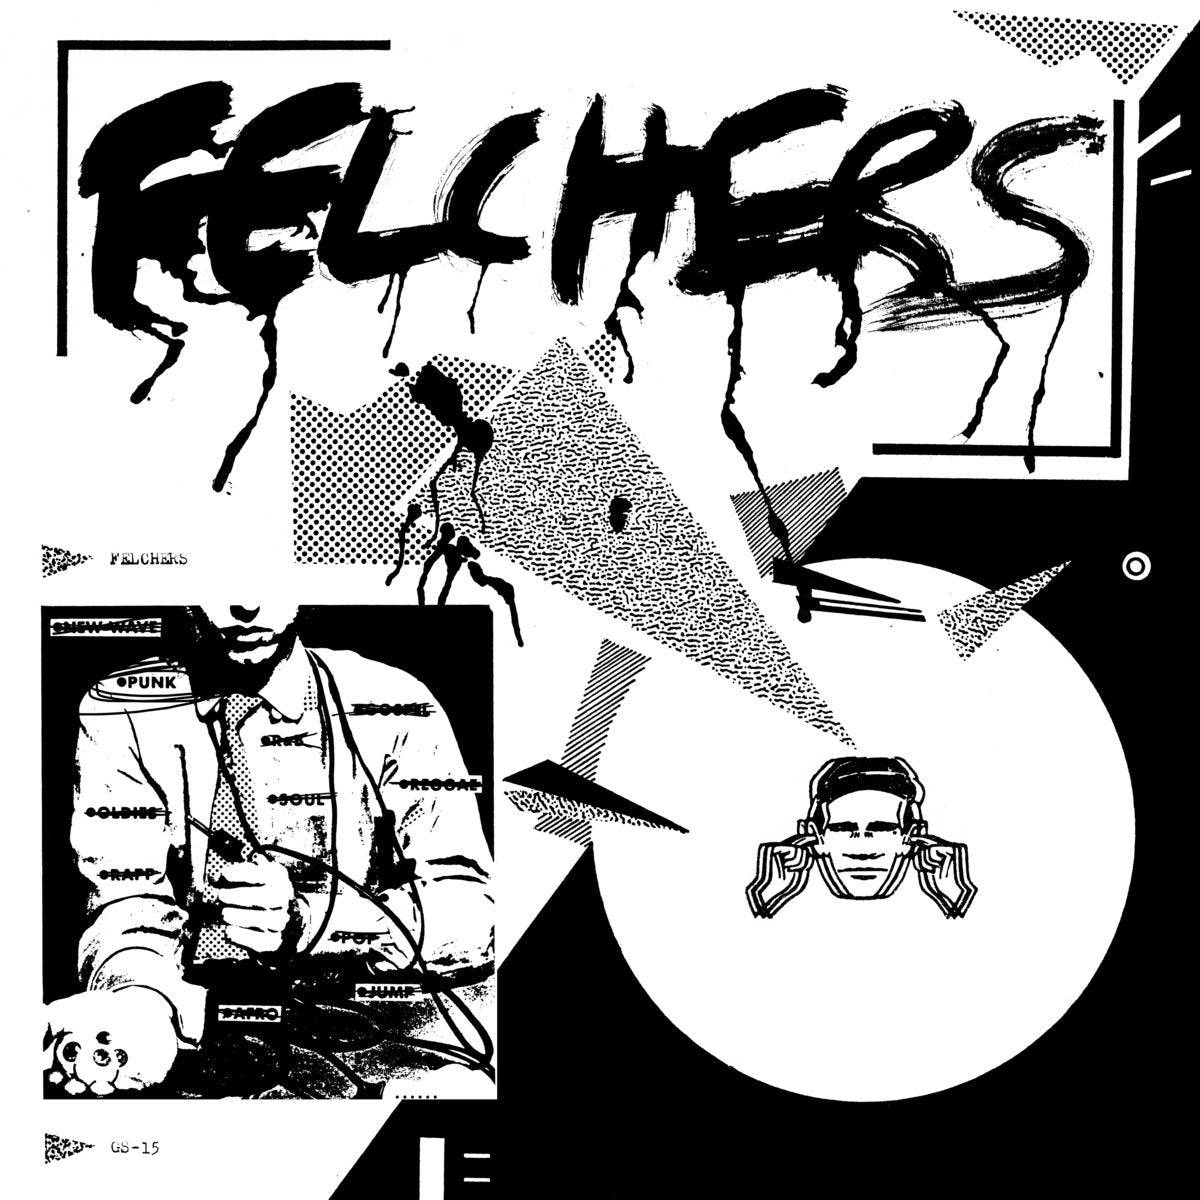 Felchers - s/t LP - Vinyl - General Speech